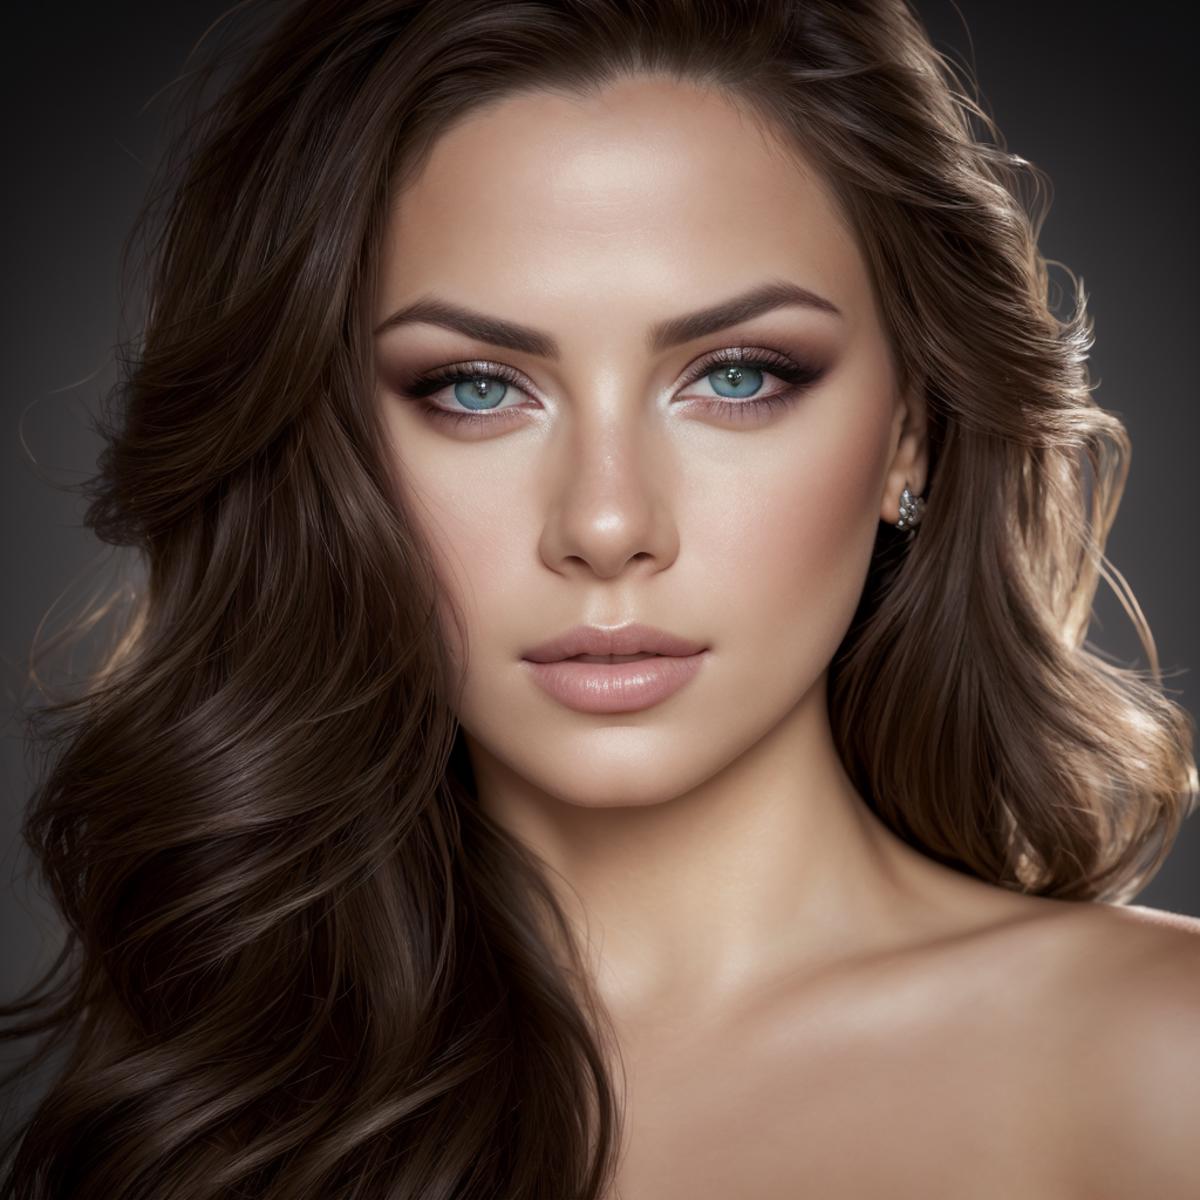 Jordan Carver -  Glamorous Model image by WillieF